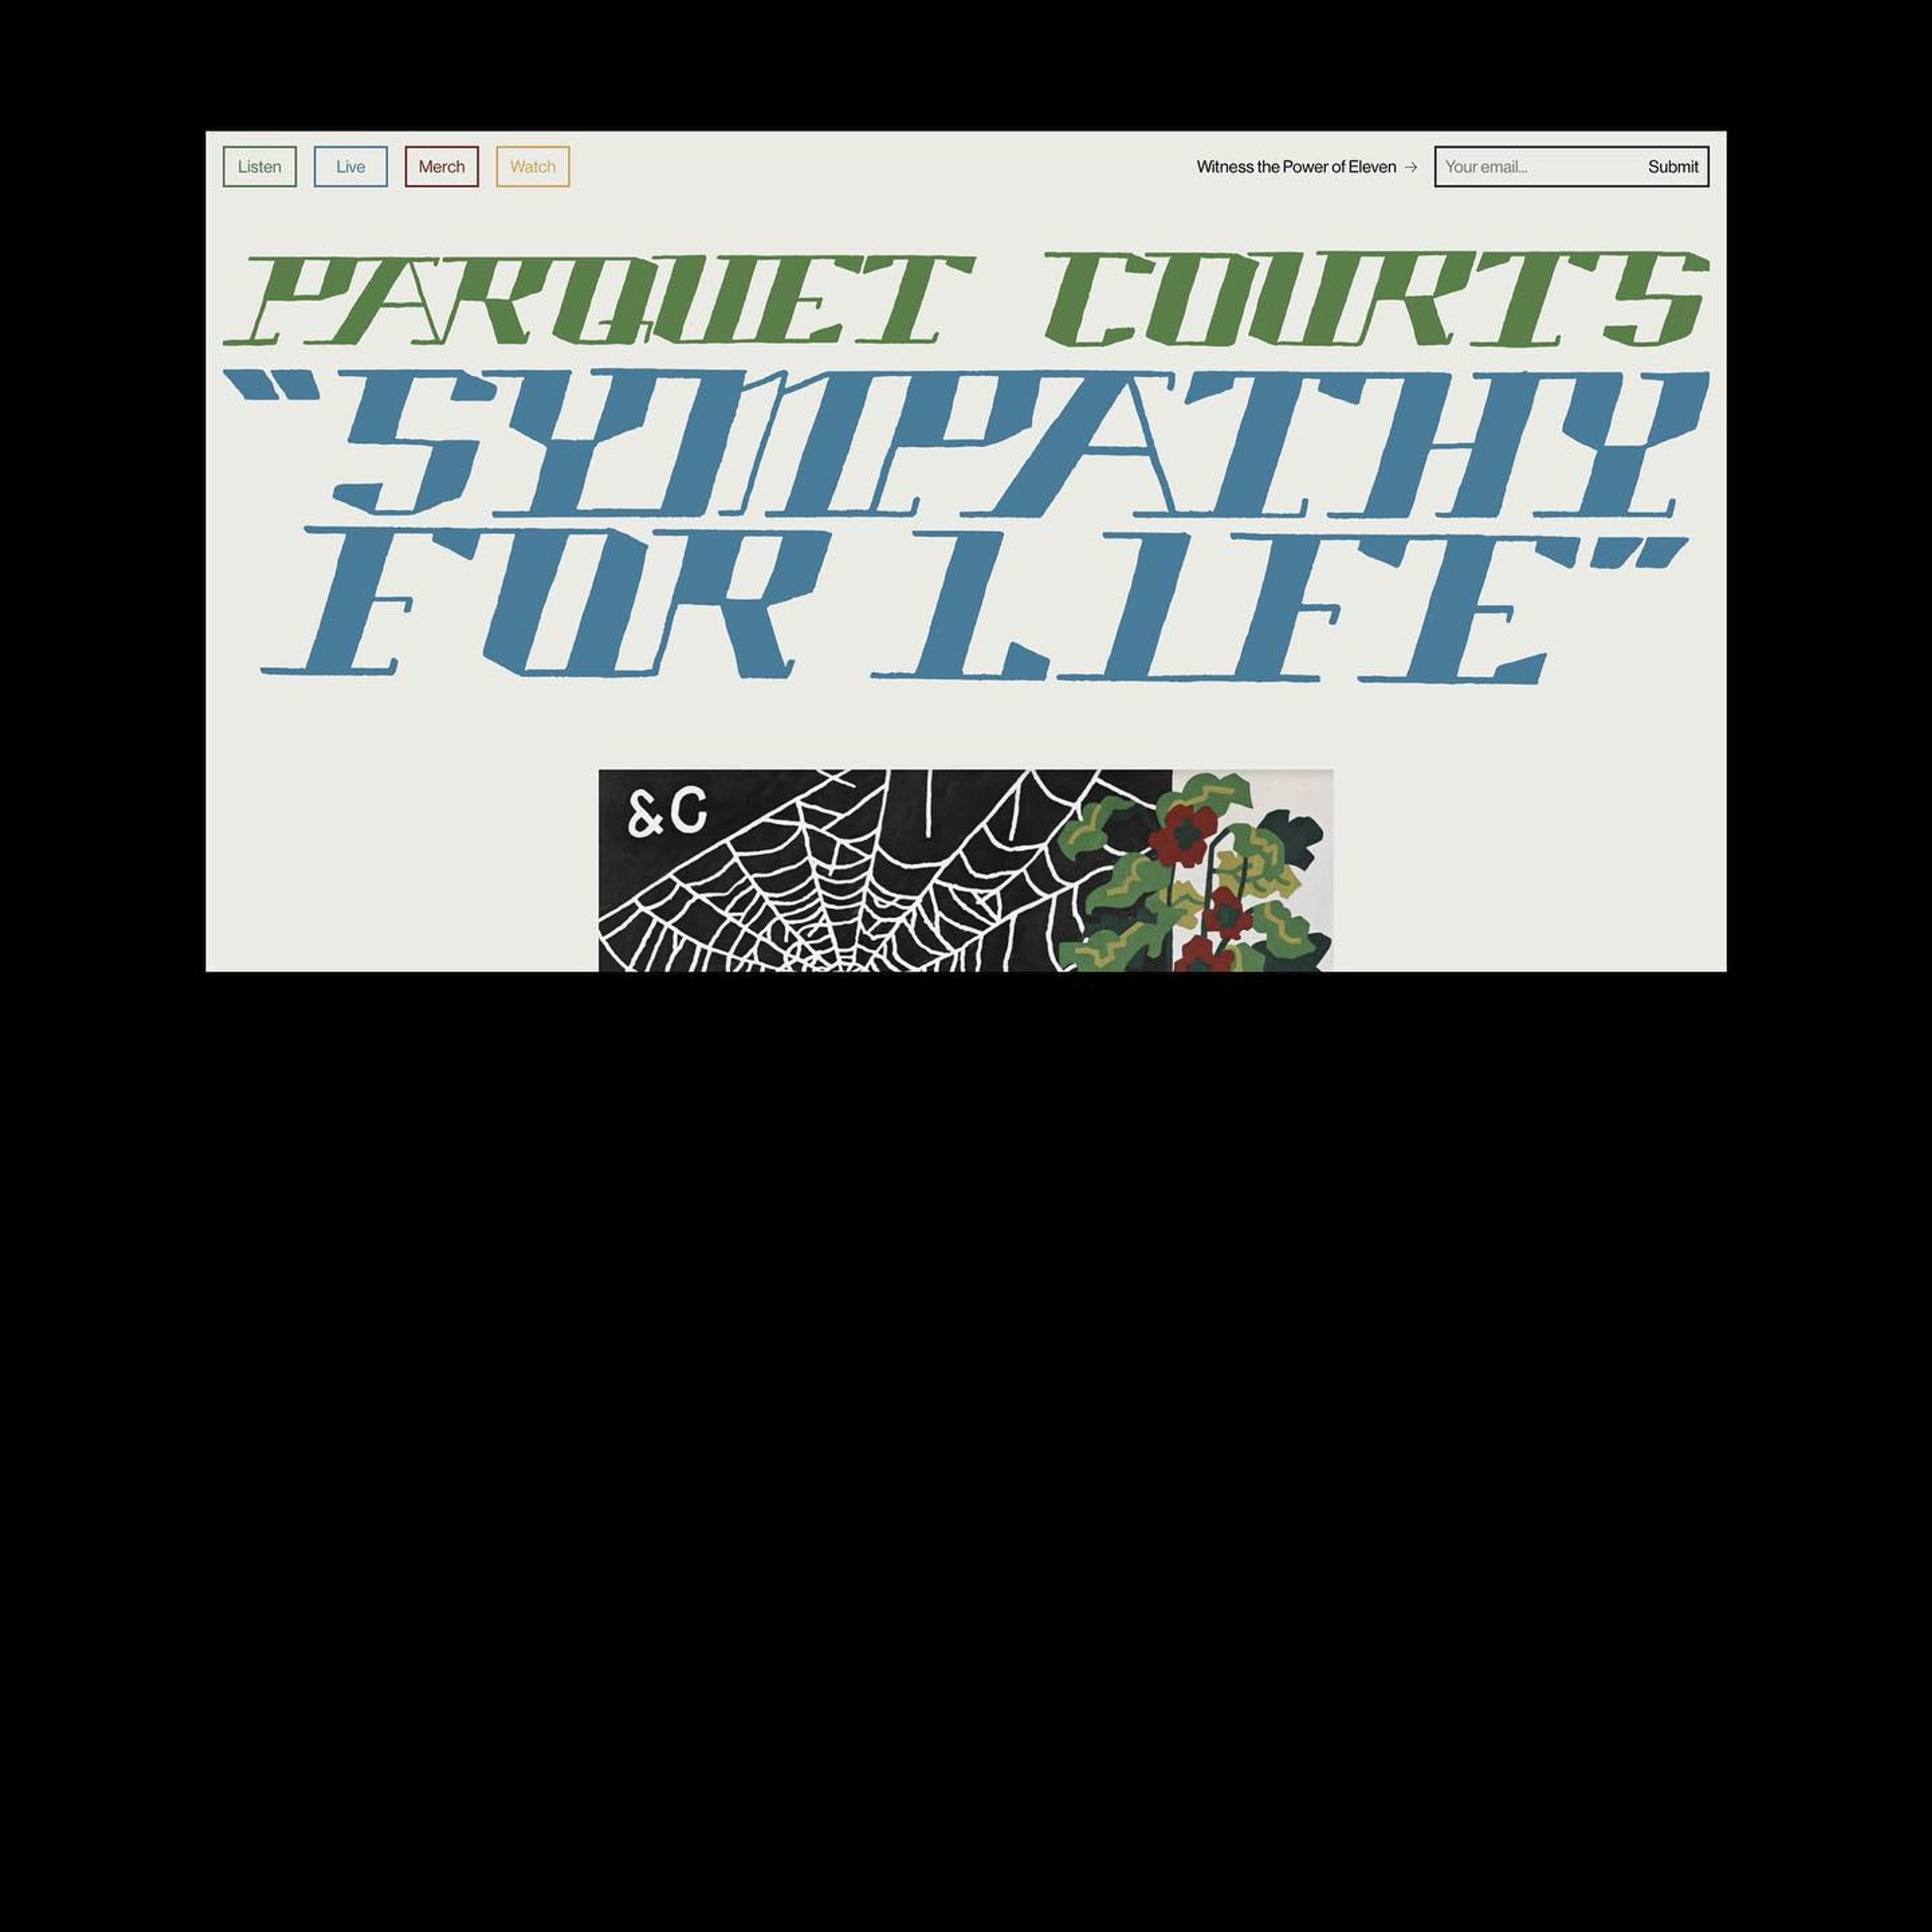 parquet courts website with album title "sympathy for life" visible